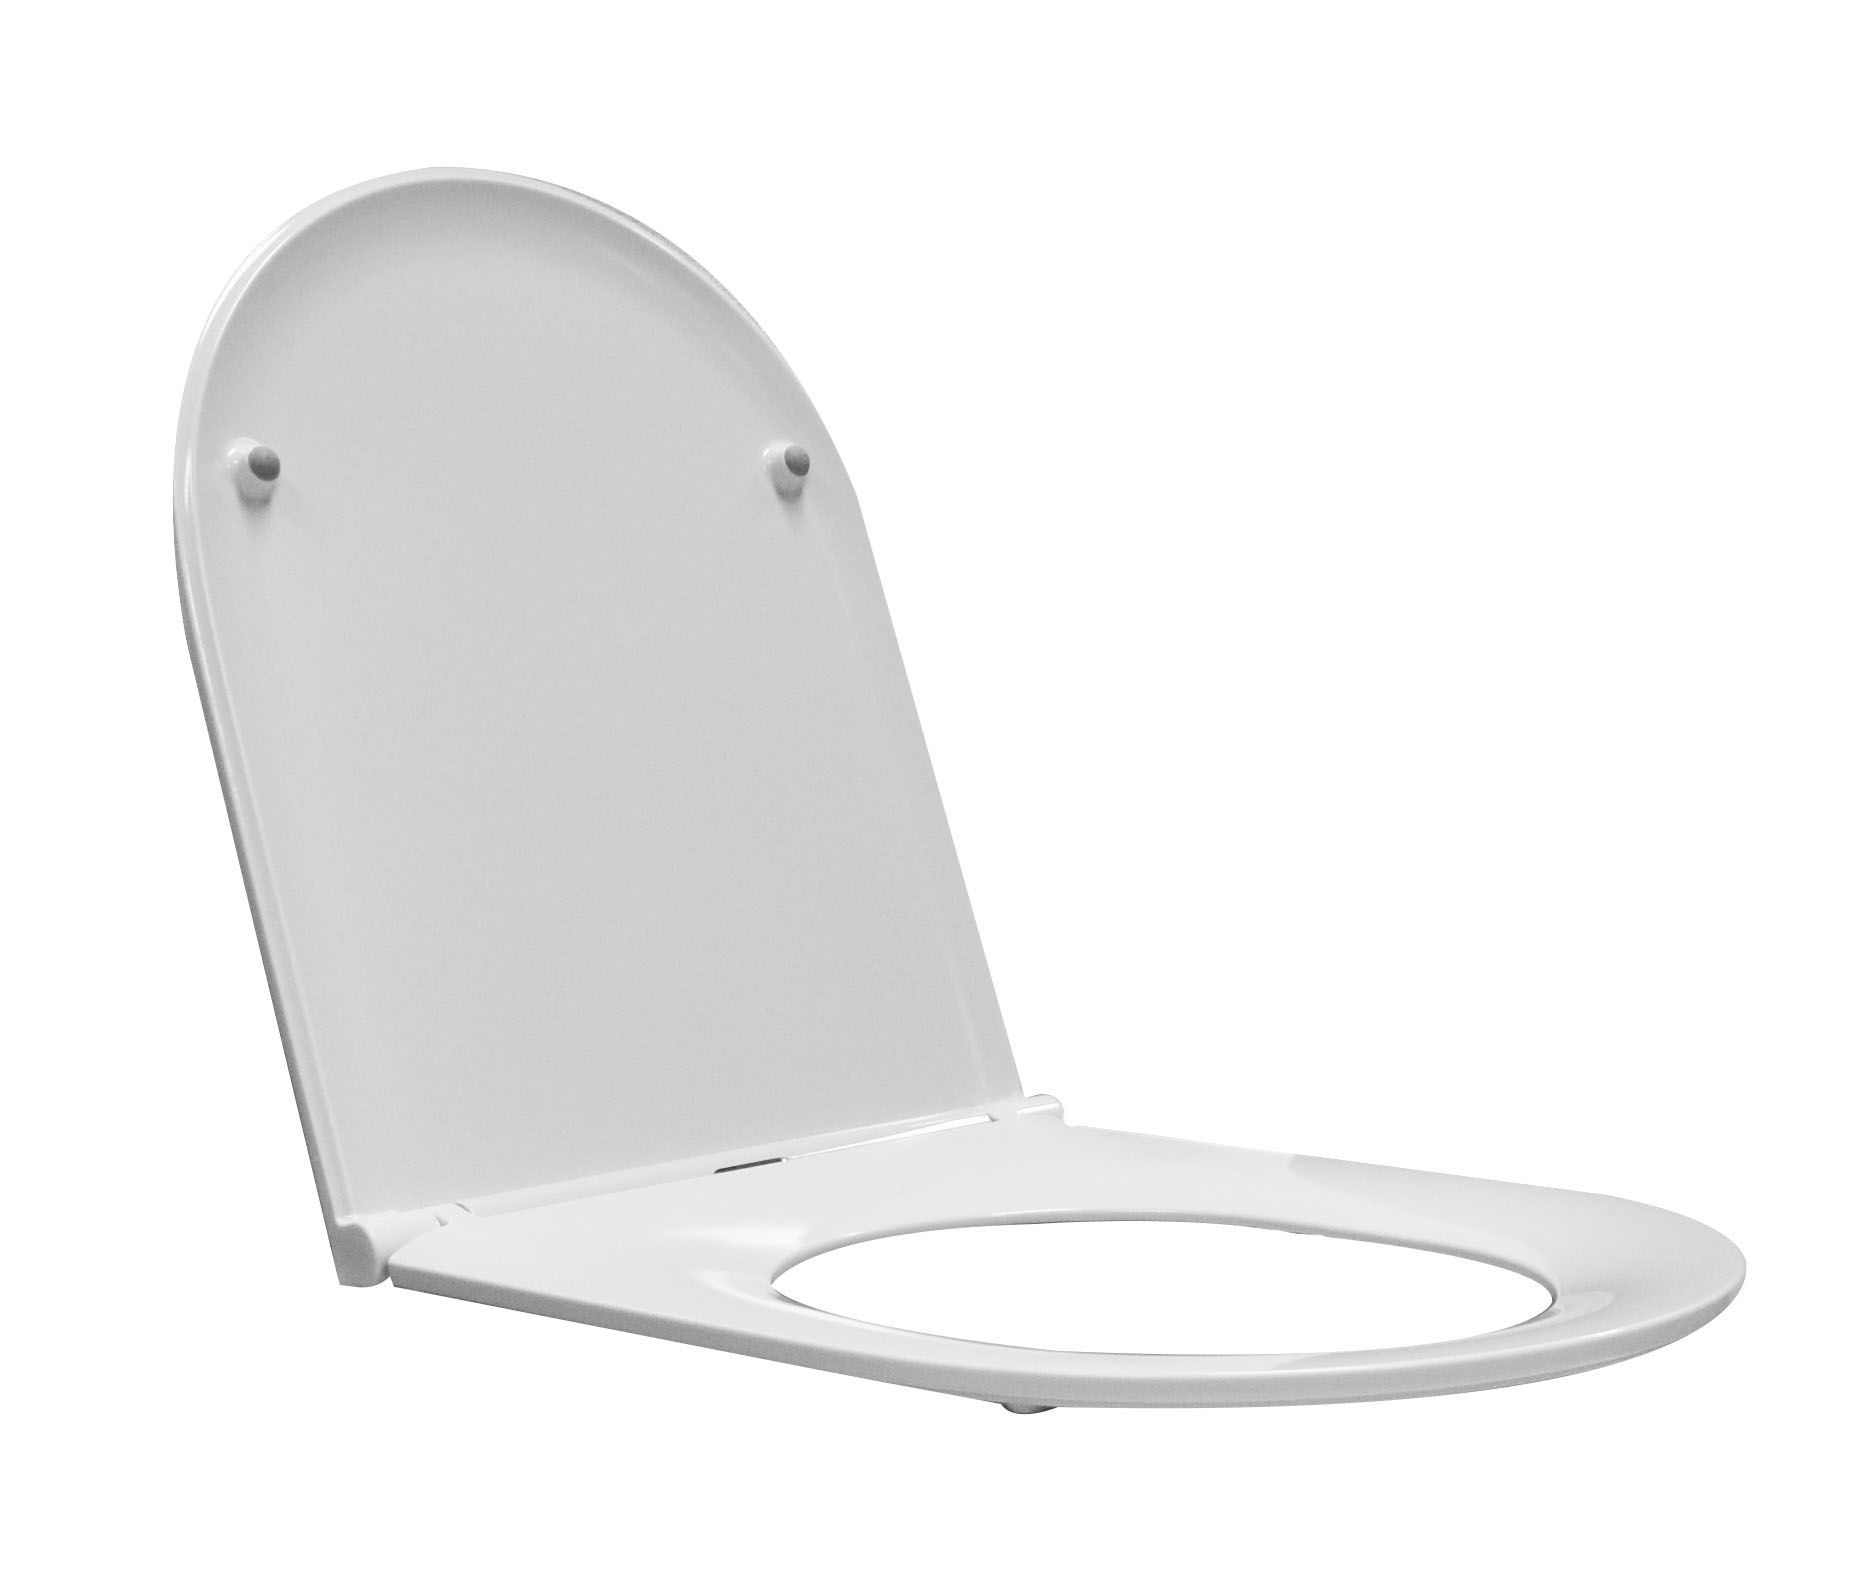 F-Design Toilet Vesta zitting